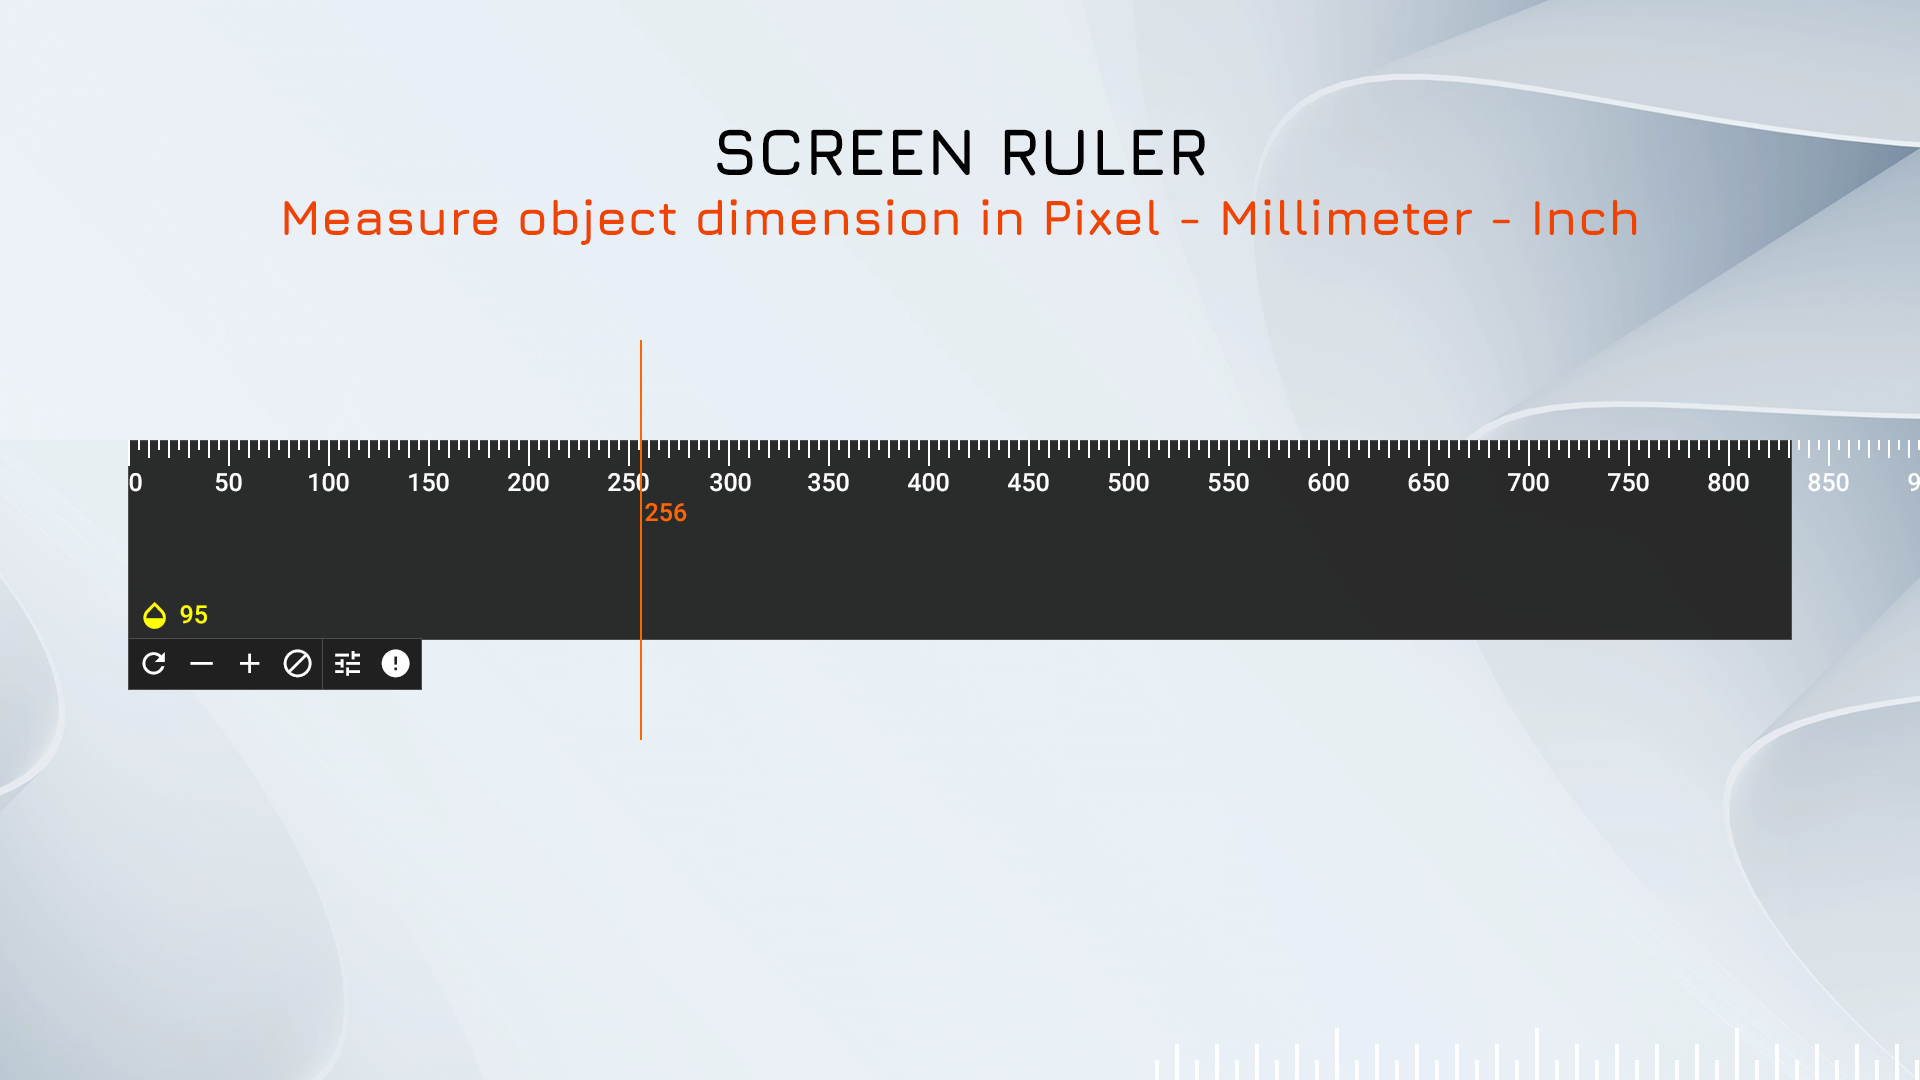 Screen Ruler - Measure object dimension in Pixel - Millimeter - Inch.